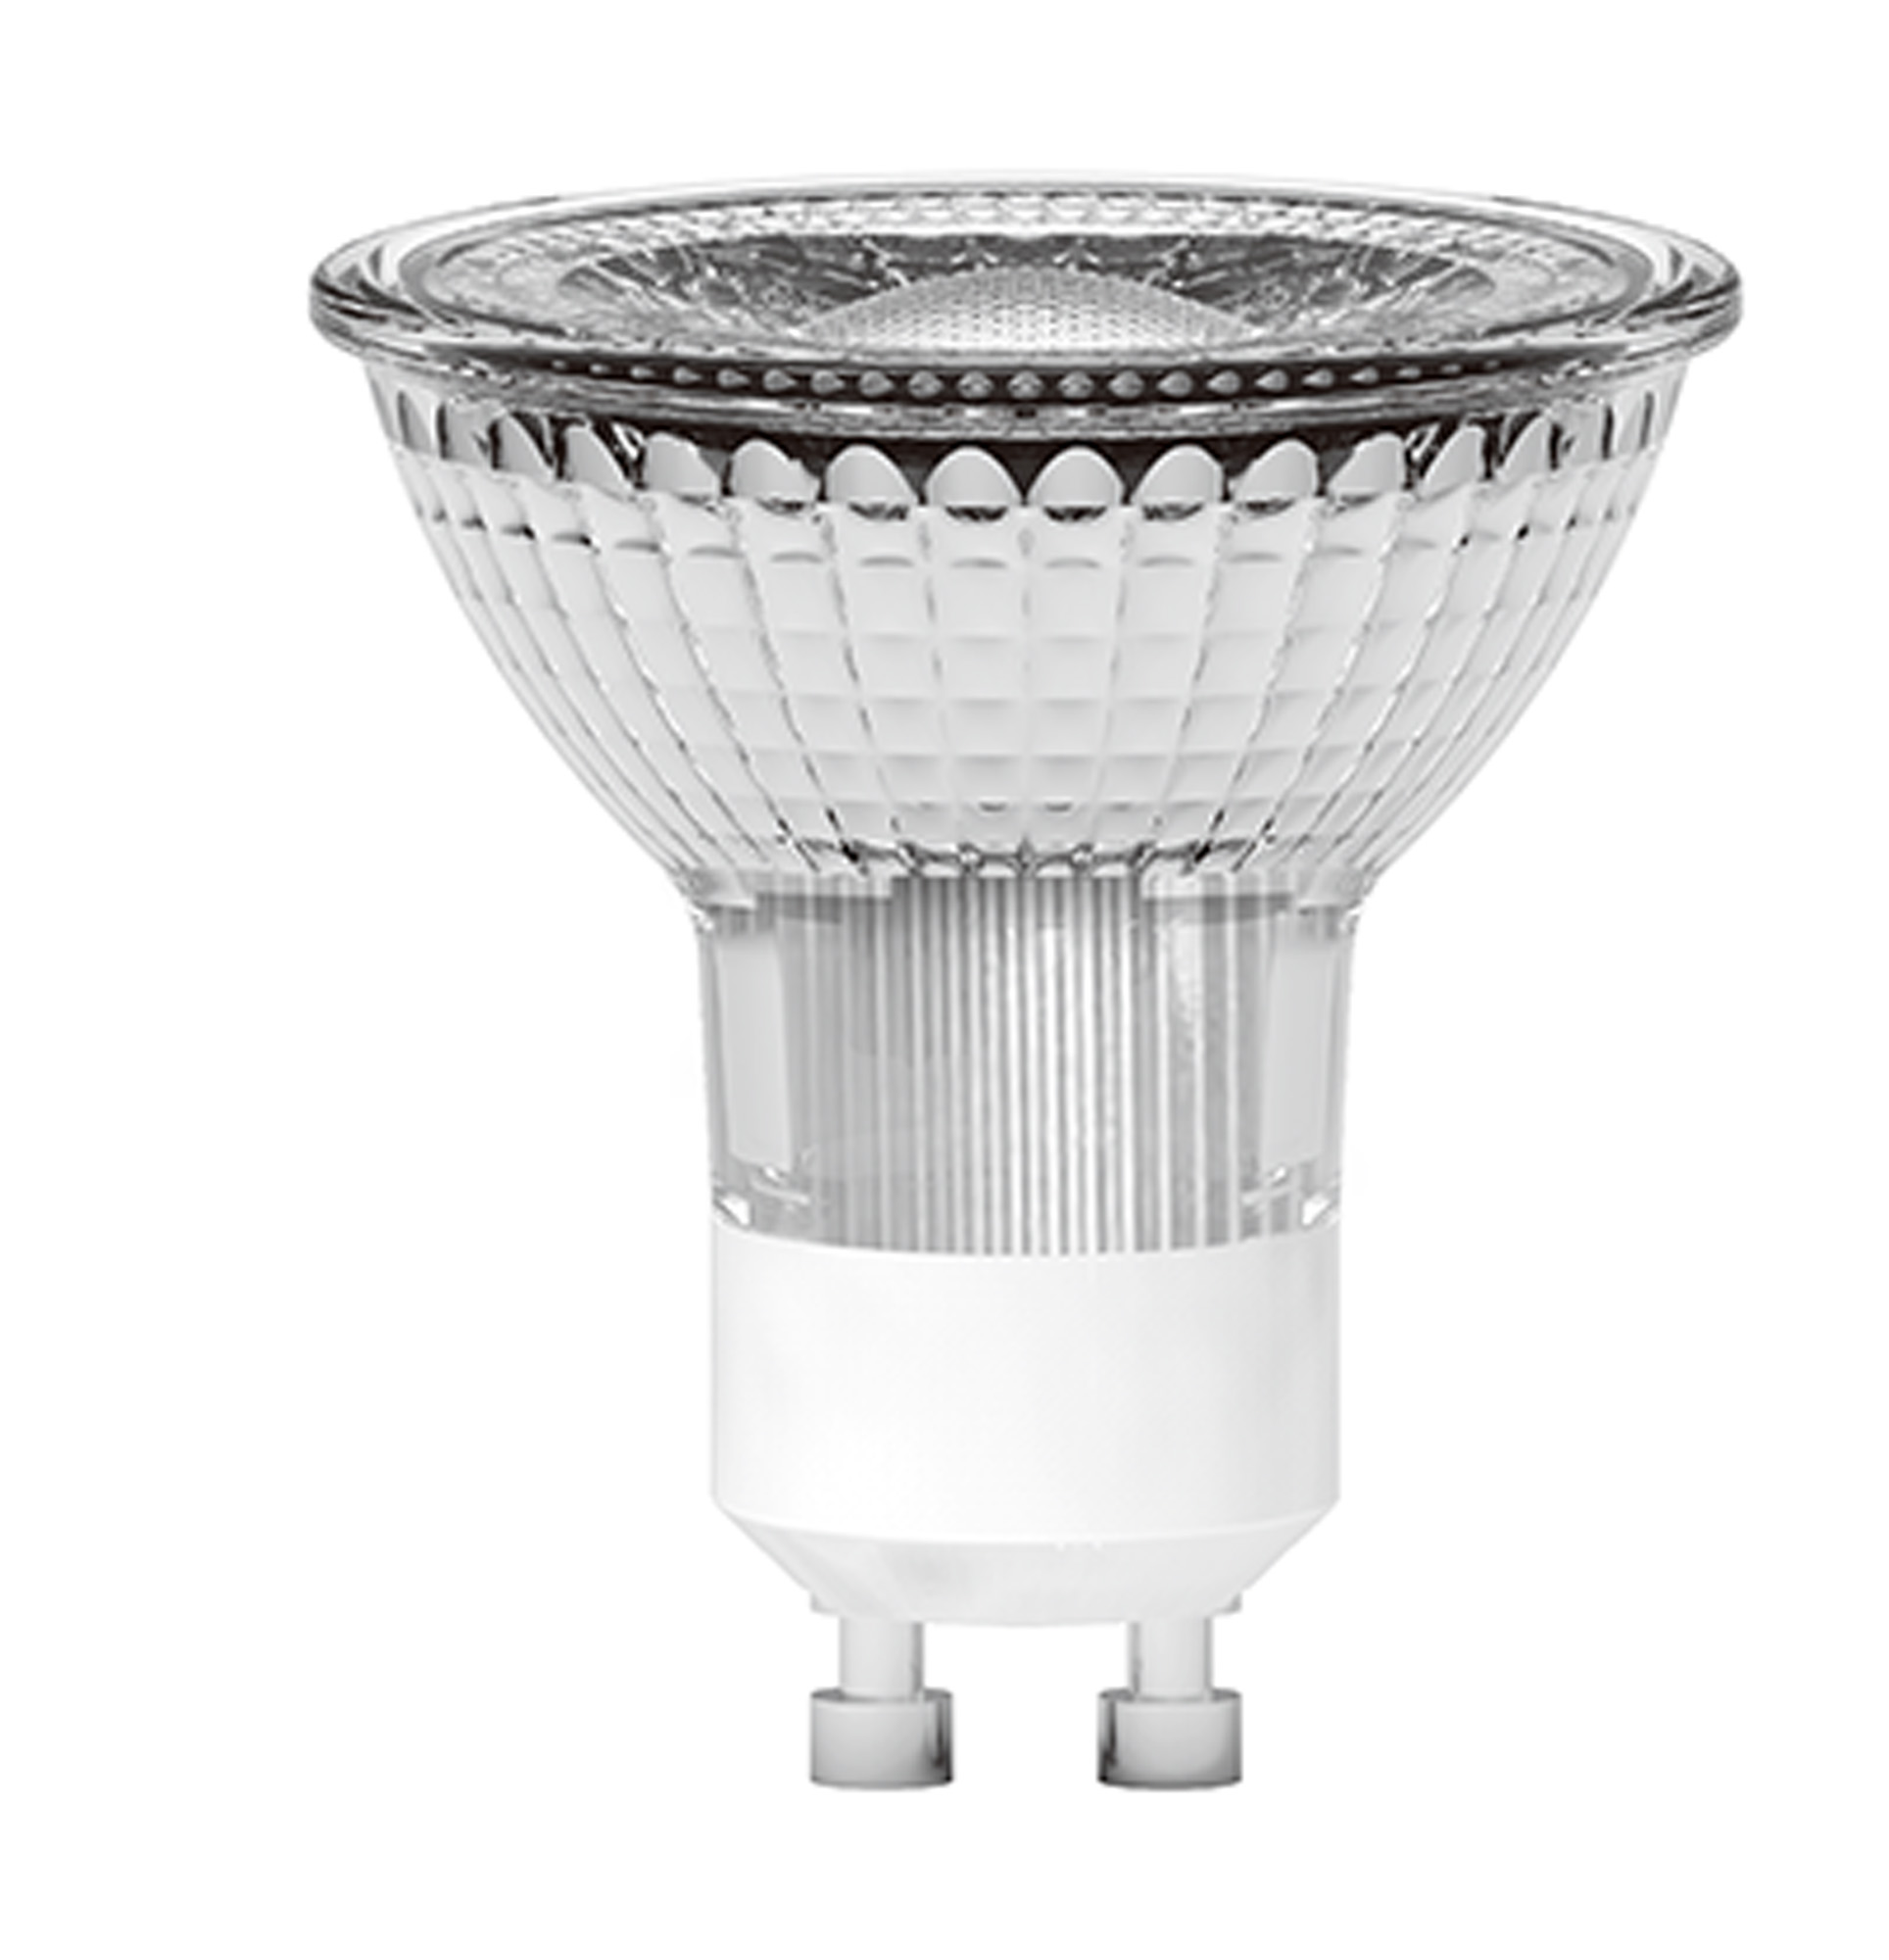 HaloLED LED Lamps Luxram Capsule